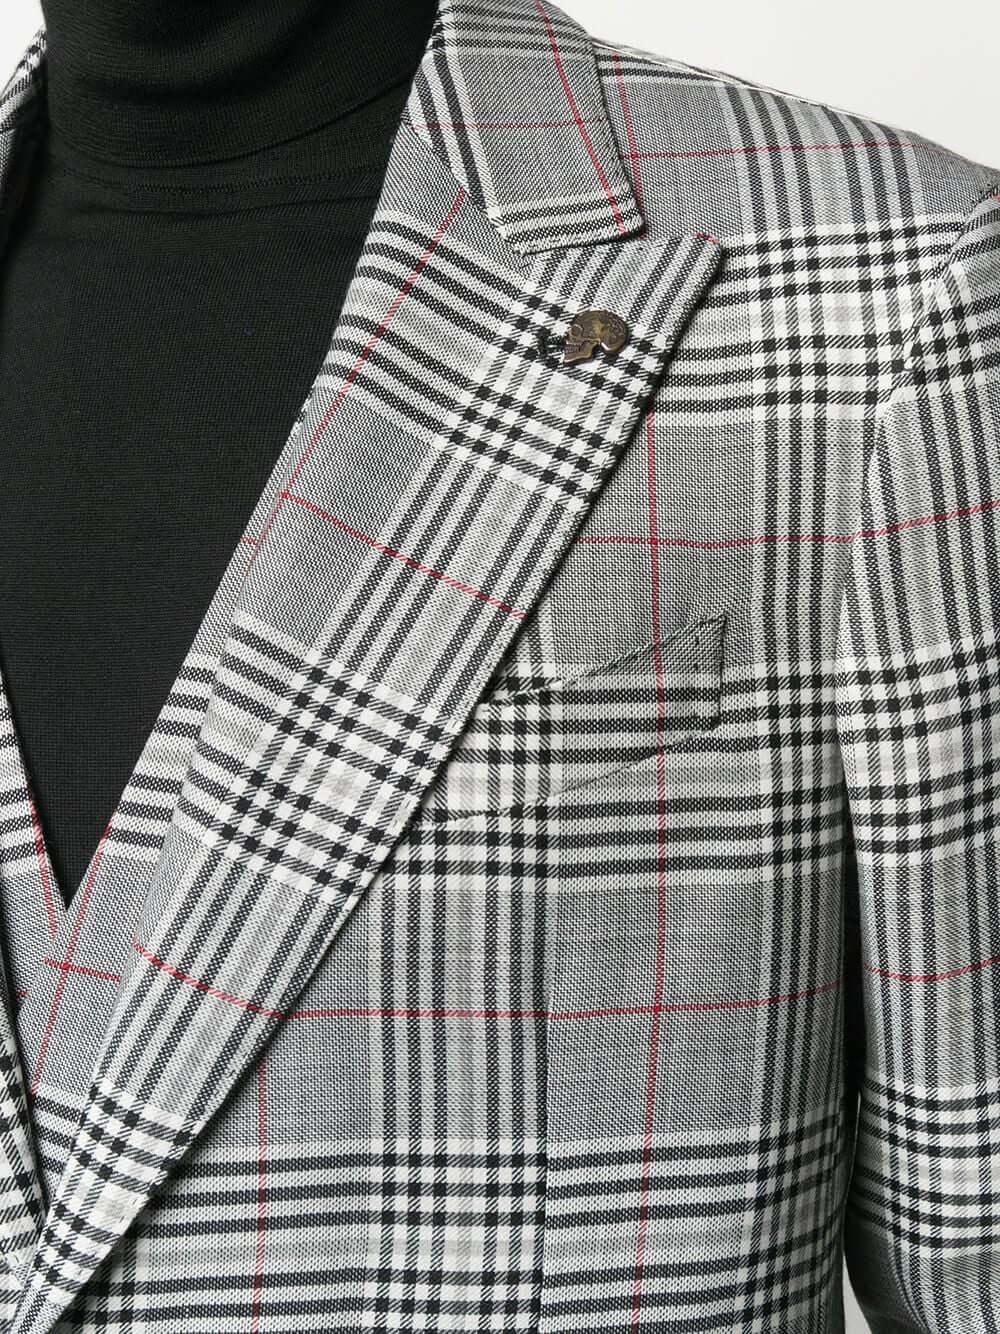 GABRIELE PASINI 2-Piece Wool-Blend Suit in Black and White Glen Checks | CLOSET Singapore